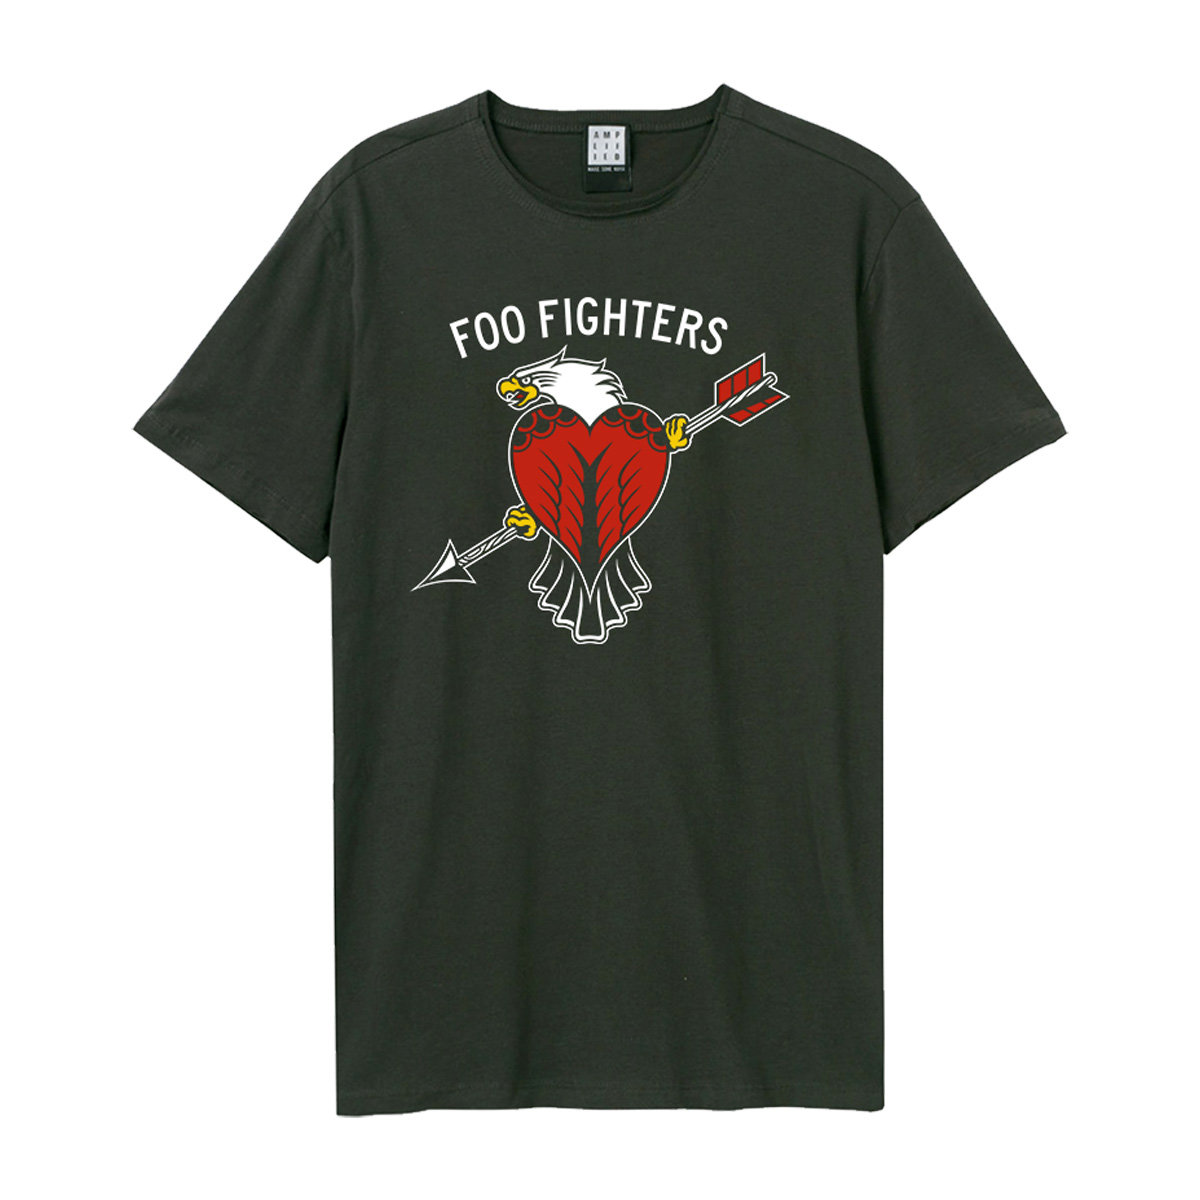 Foo Fighters - Eagle Tattoo